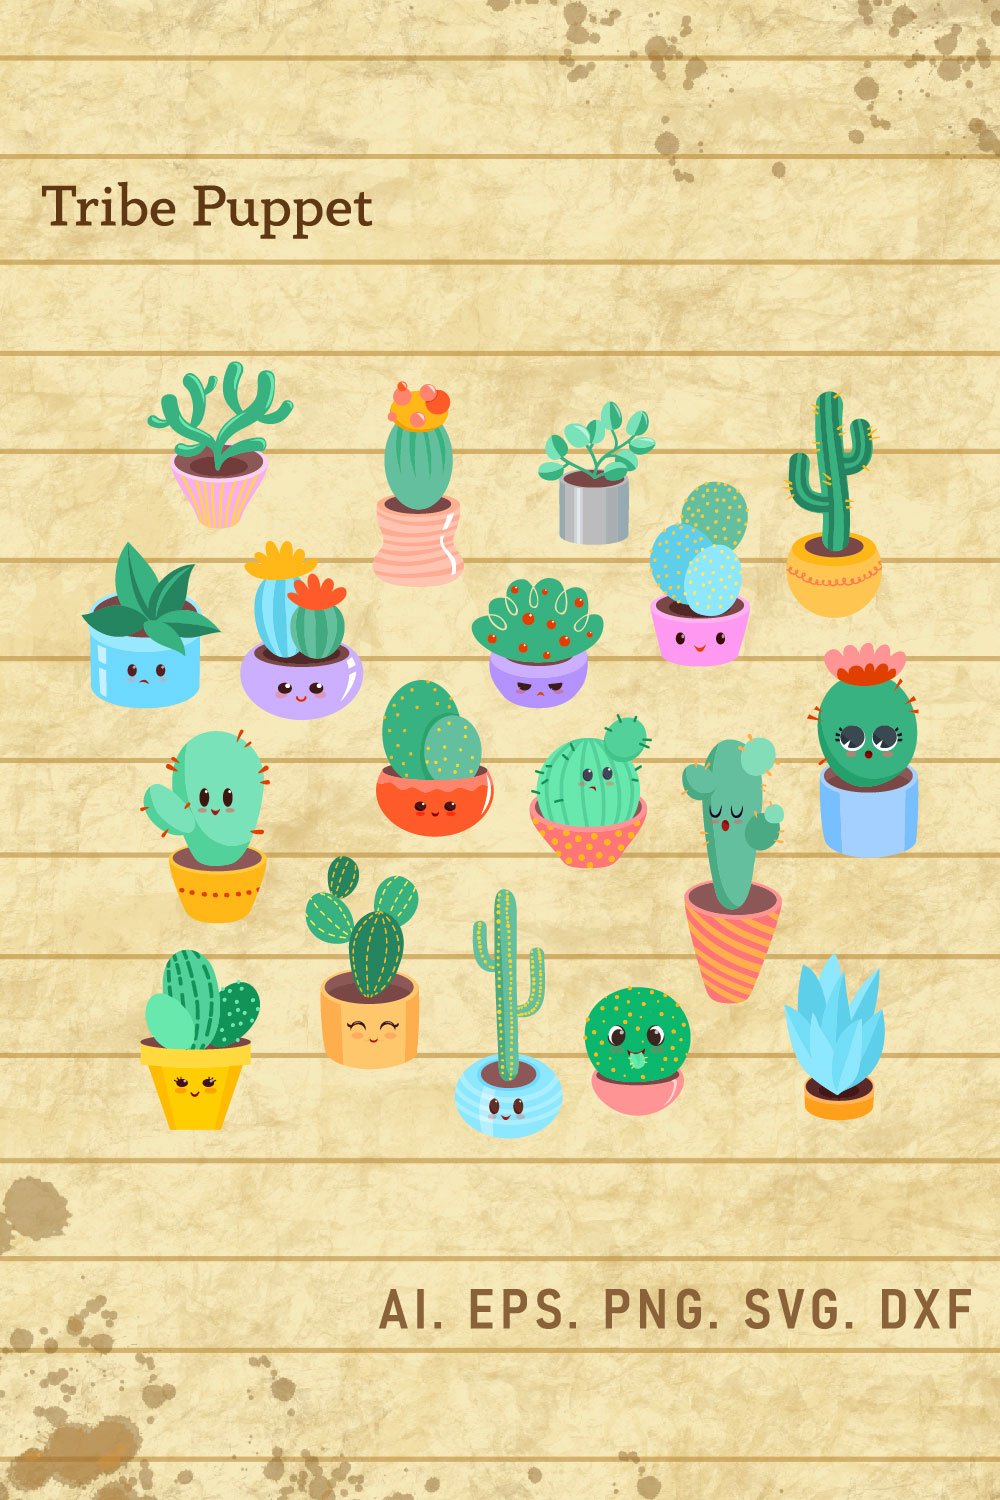 Cute Cactus pinterest preview image.